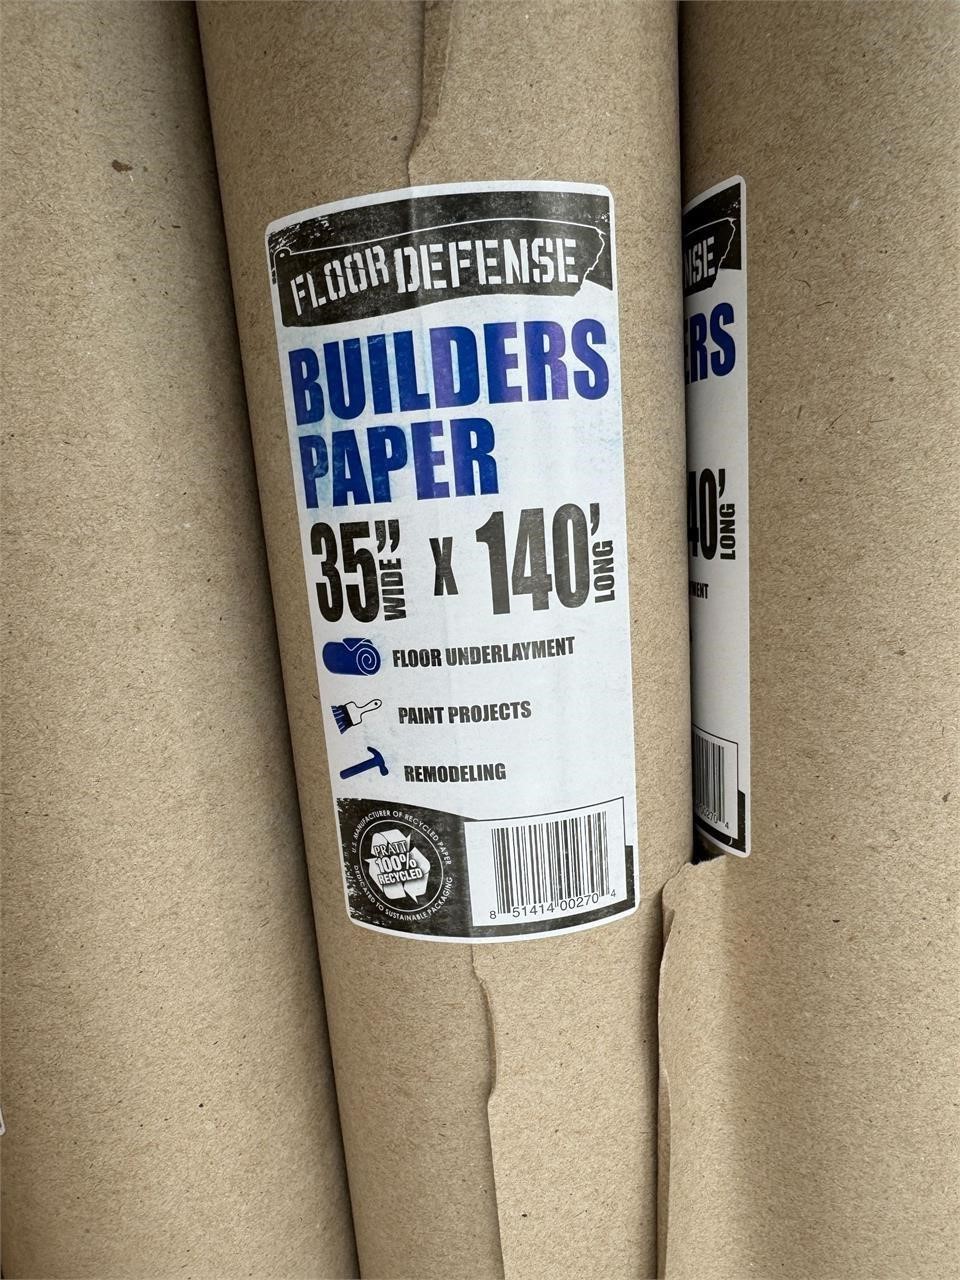 Qty 2 Floor Defense Builders Paper 35"W x 140'L